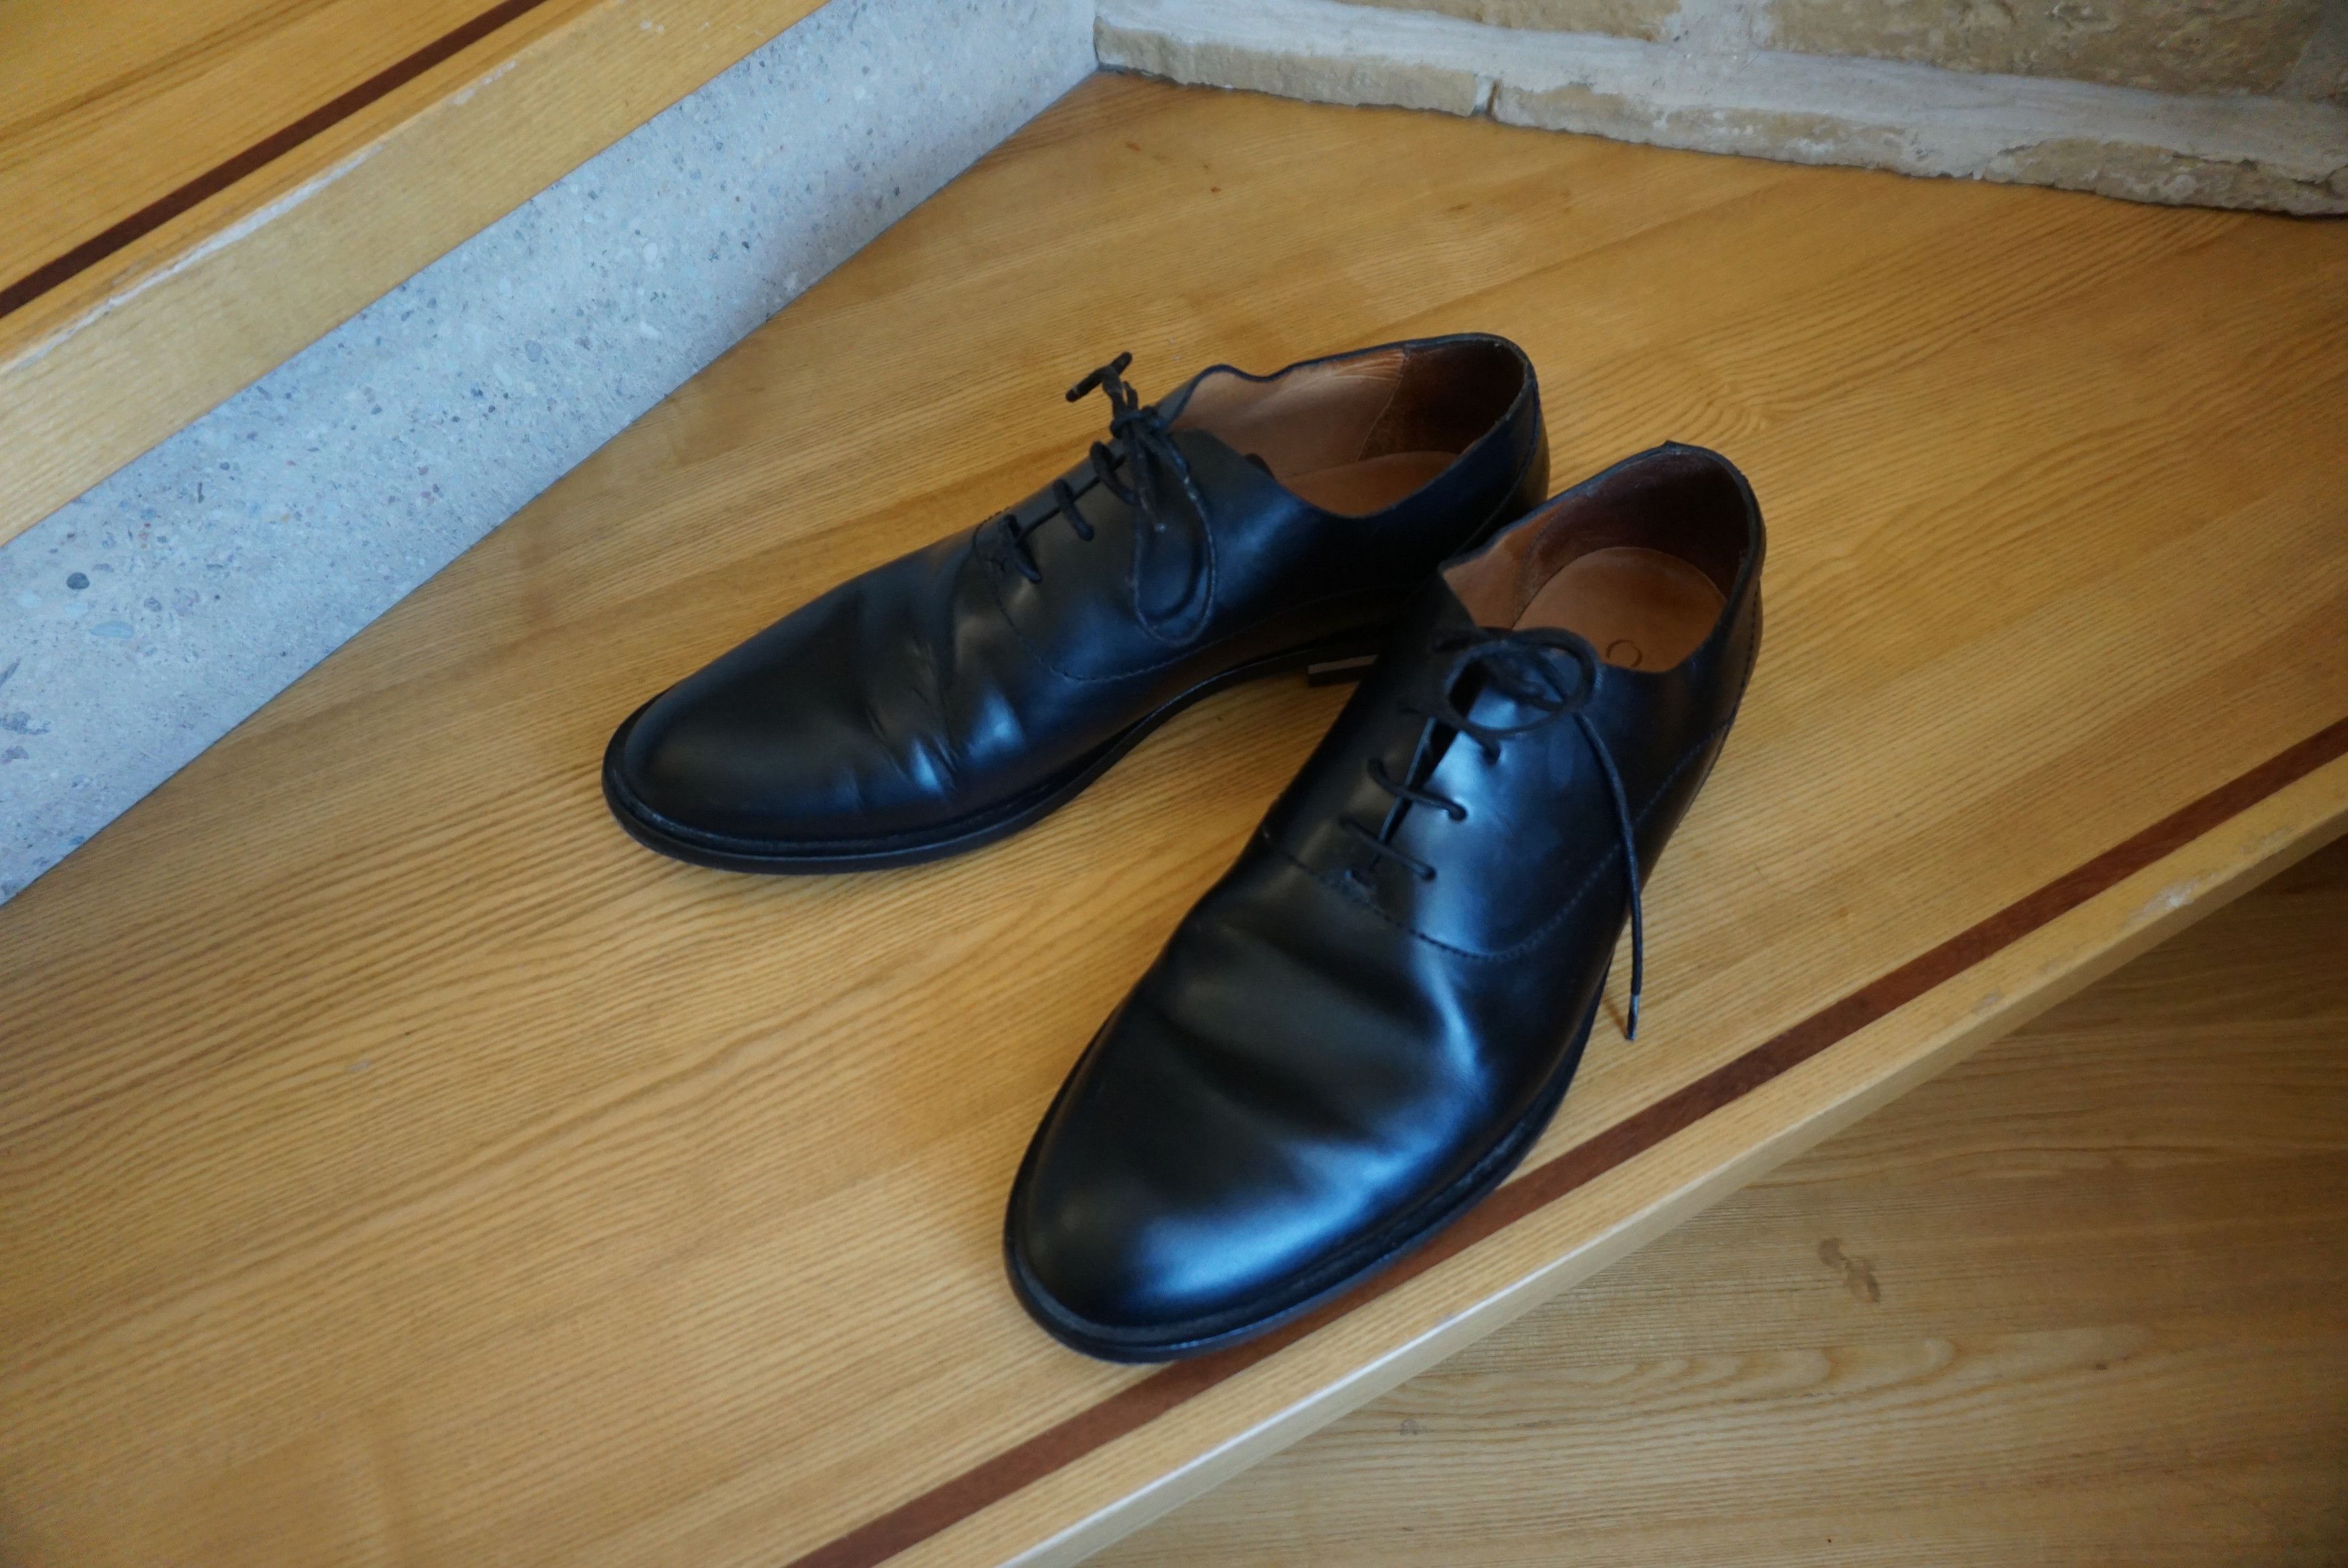 Cos COS RPR$250 leather office shoes EU44 black formal lace up Size US 10.5 / EU 43-44 - 17 Thumbnail